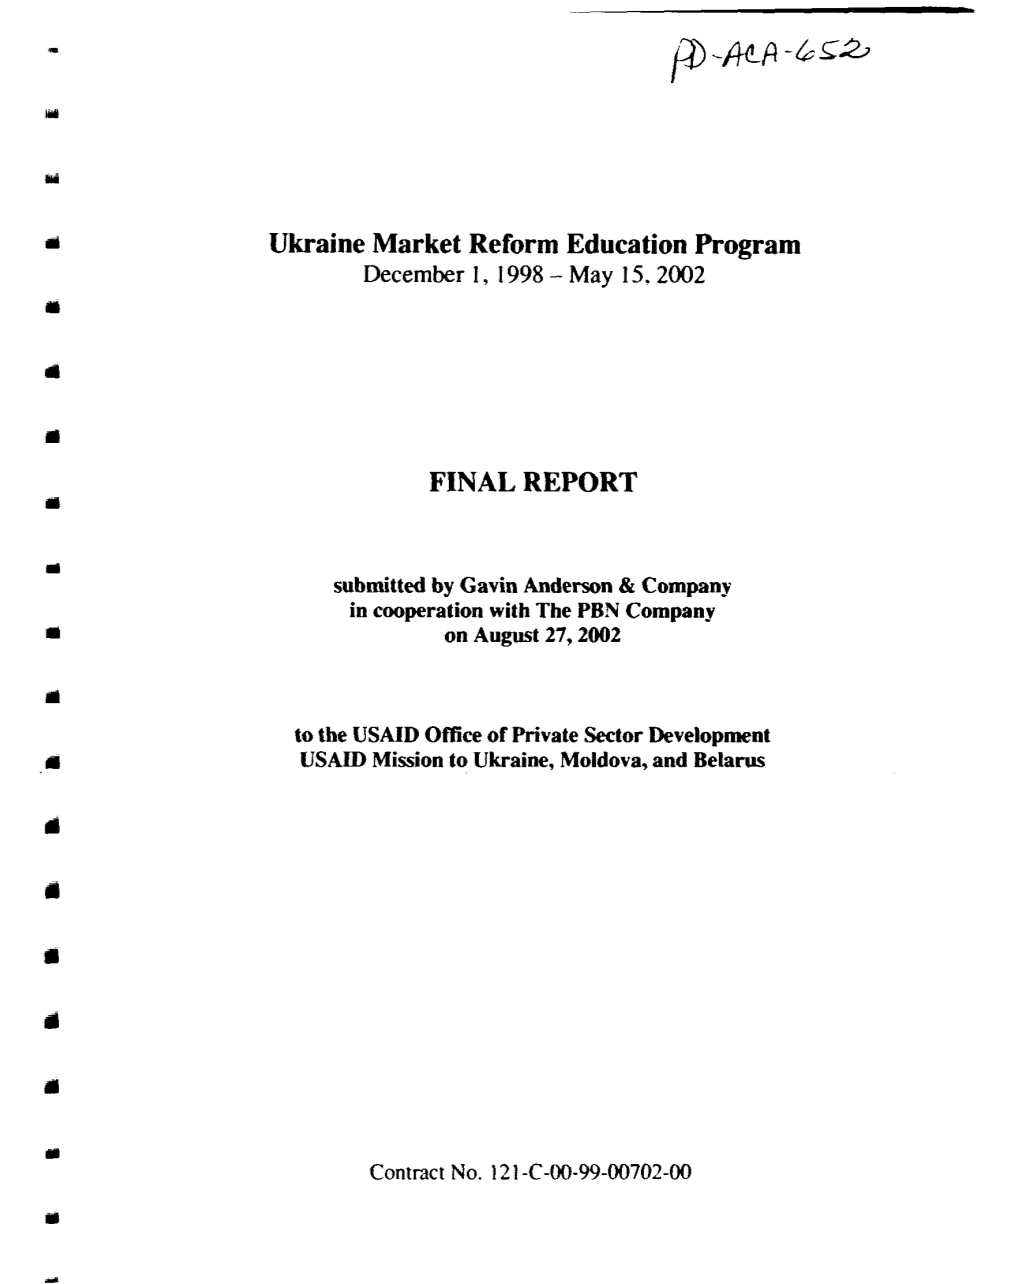 Ukraine Market Reform Education Program FINAL REPORT